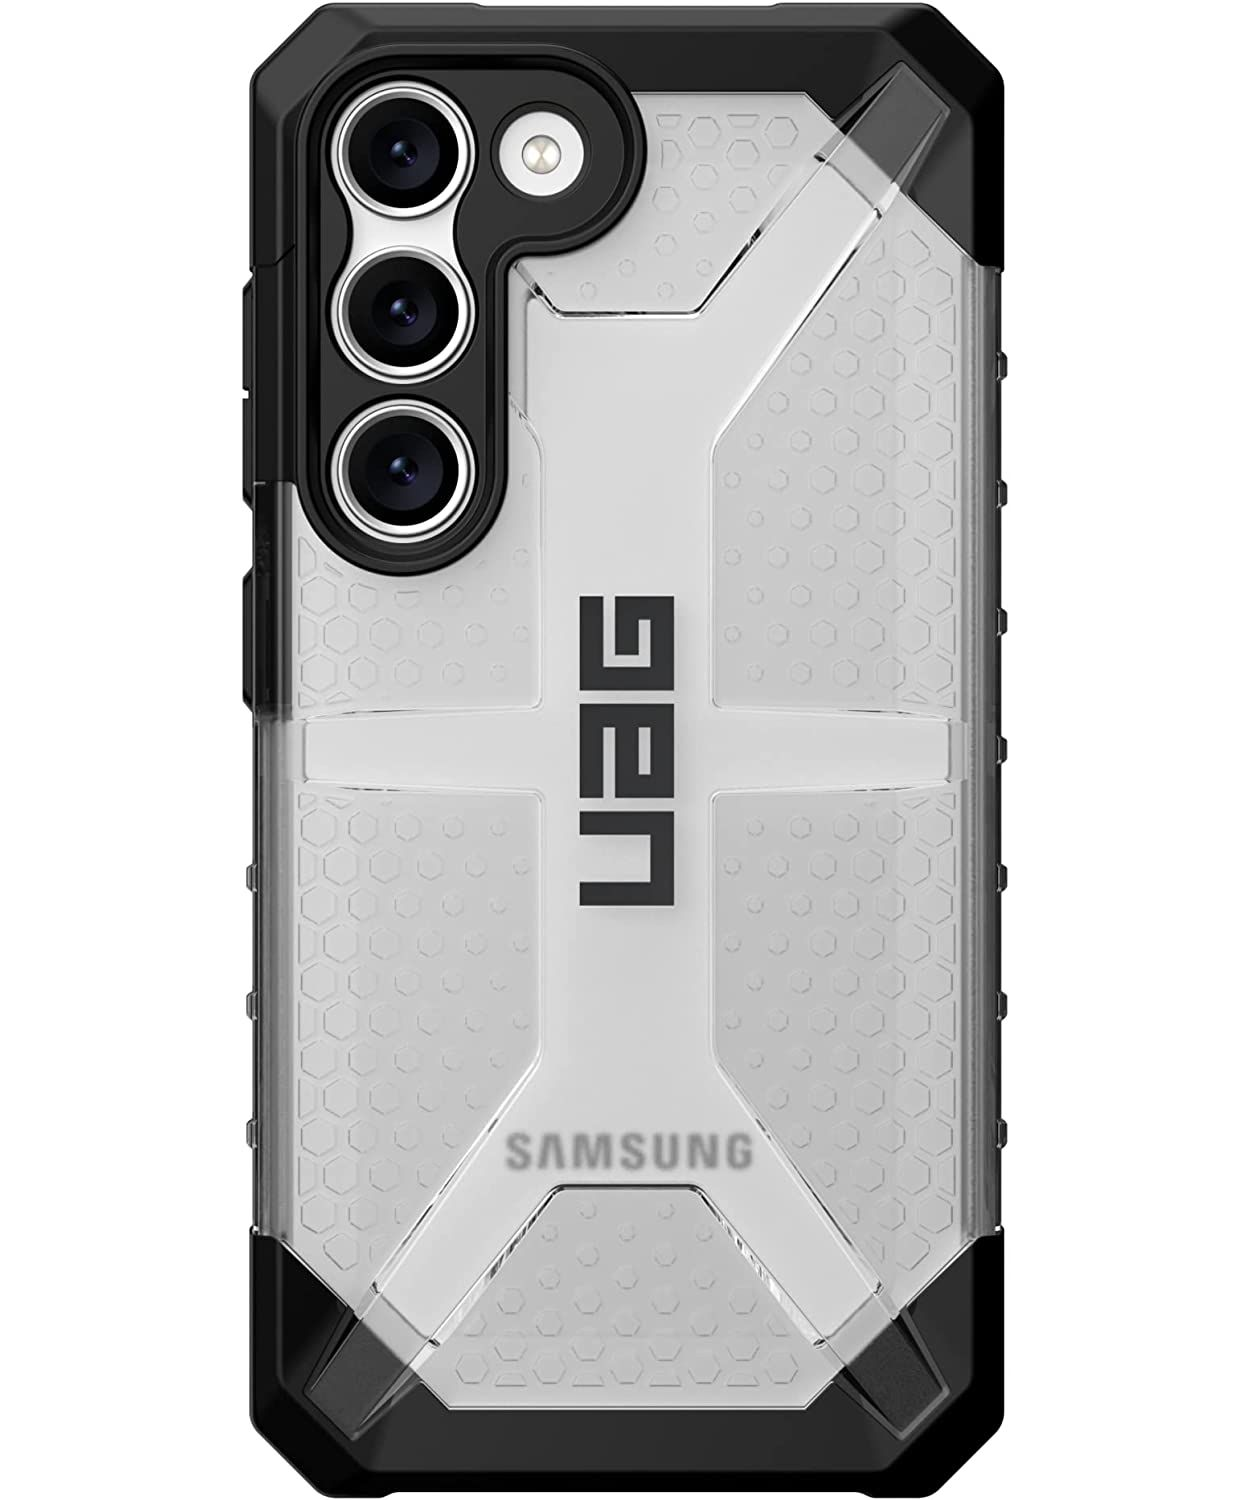 Backcover, URBAN 5G, Galaxy Plasma, GEAR ARMOR S23 (transparent) Samsung, ice